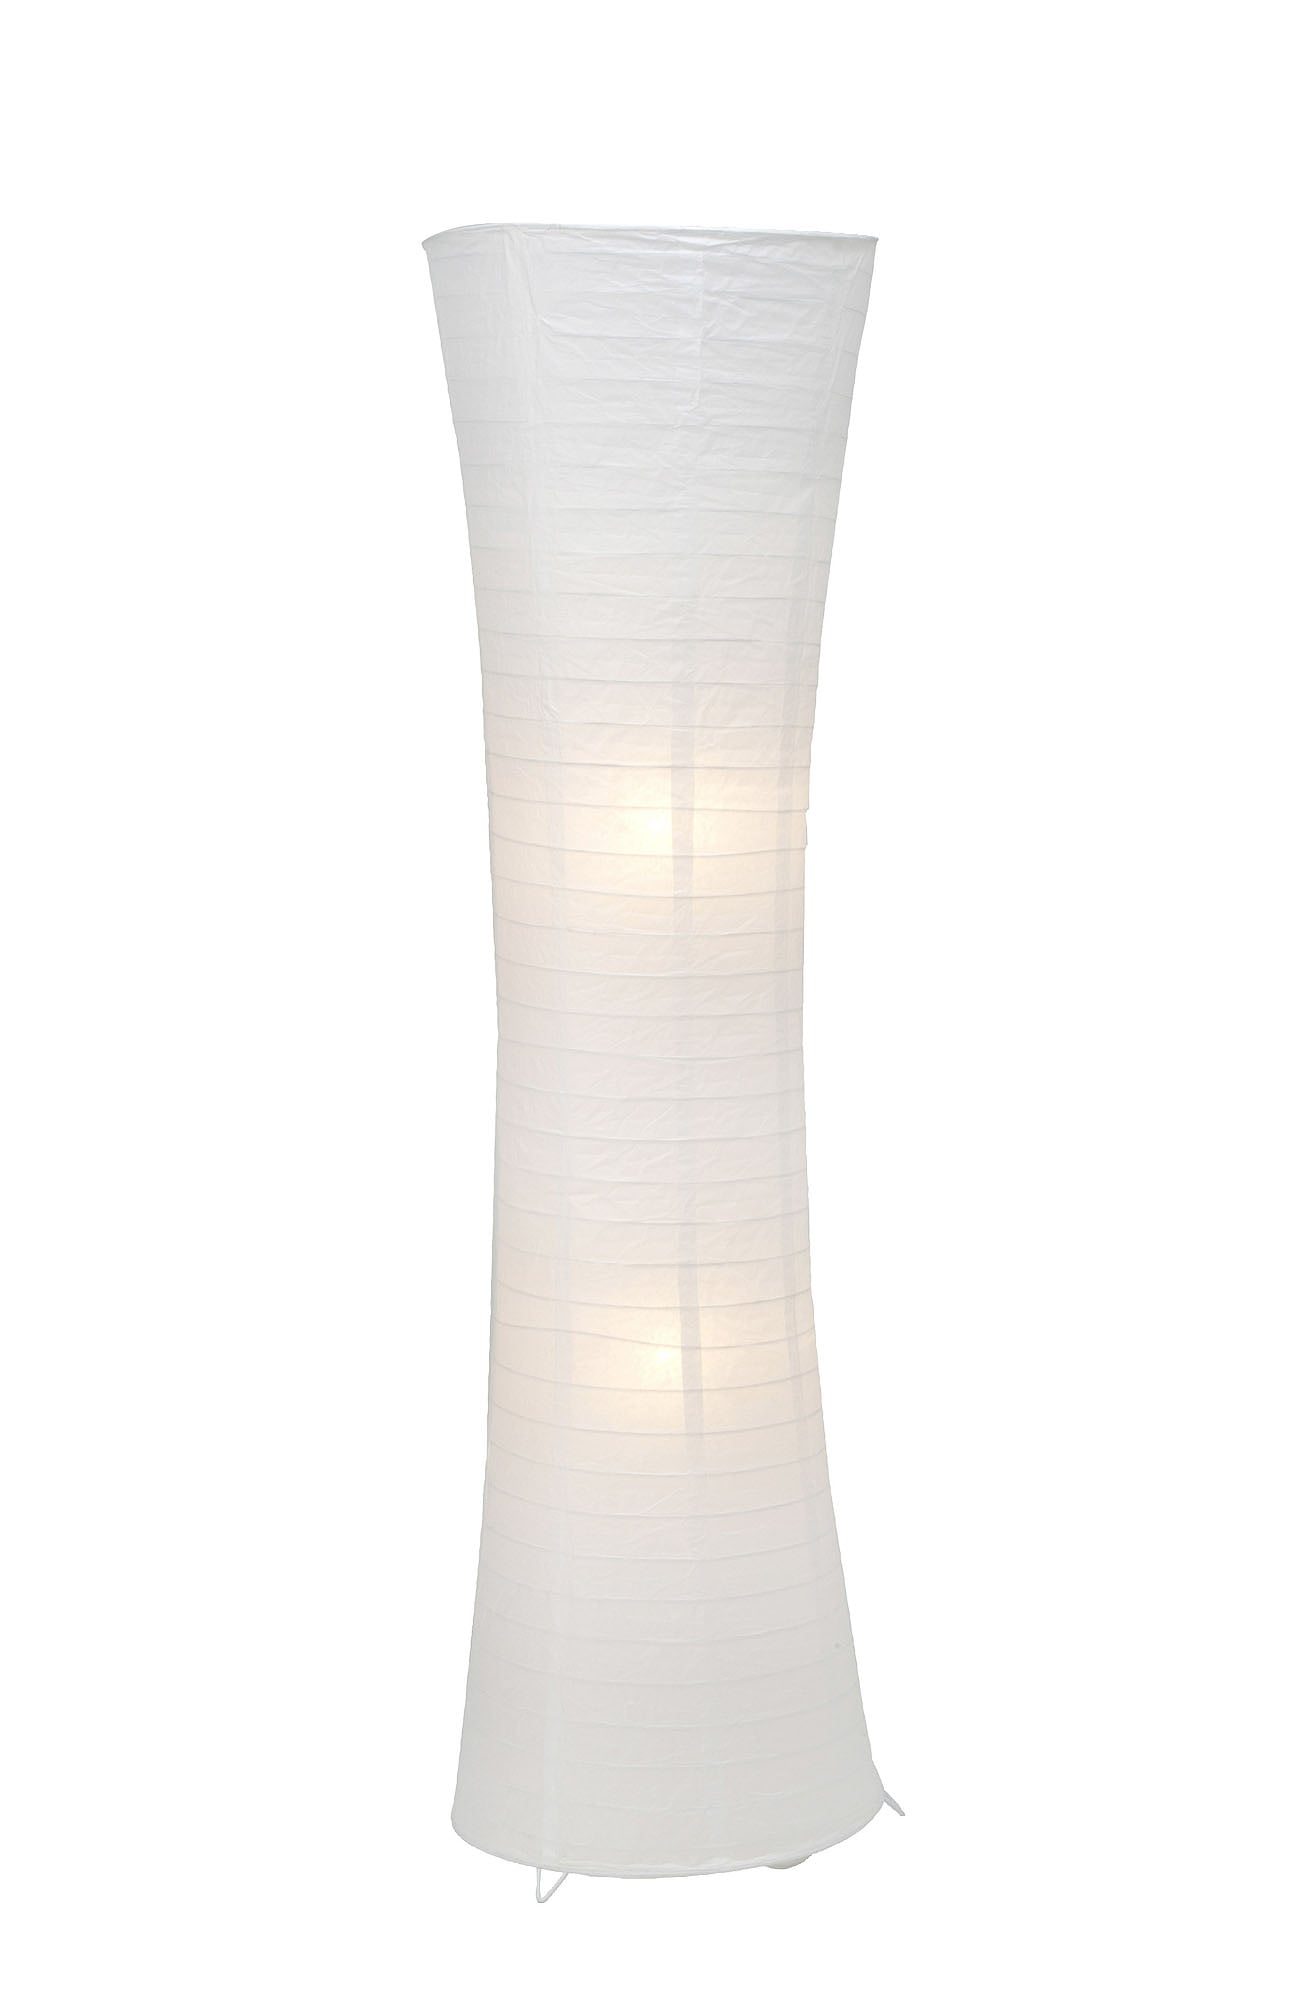 Brilliant Stehlampe »Becca«, 2 flammig-flammig, 125 cm Höhe, 35 cm Breite, 2 x E27, Metall/Papier, weiß